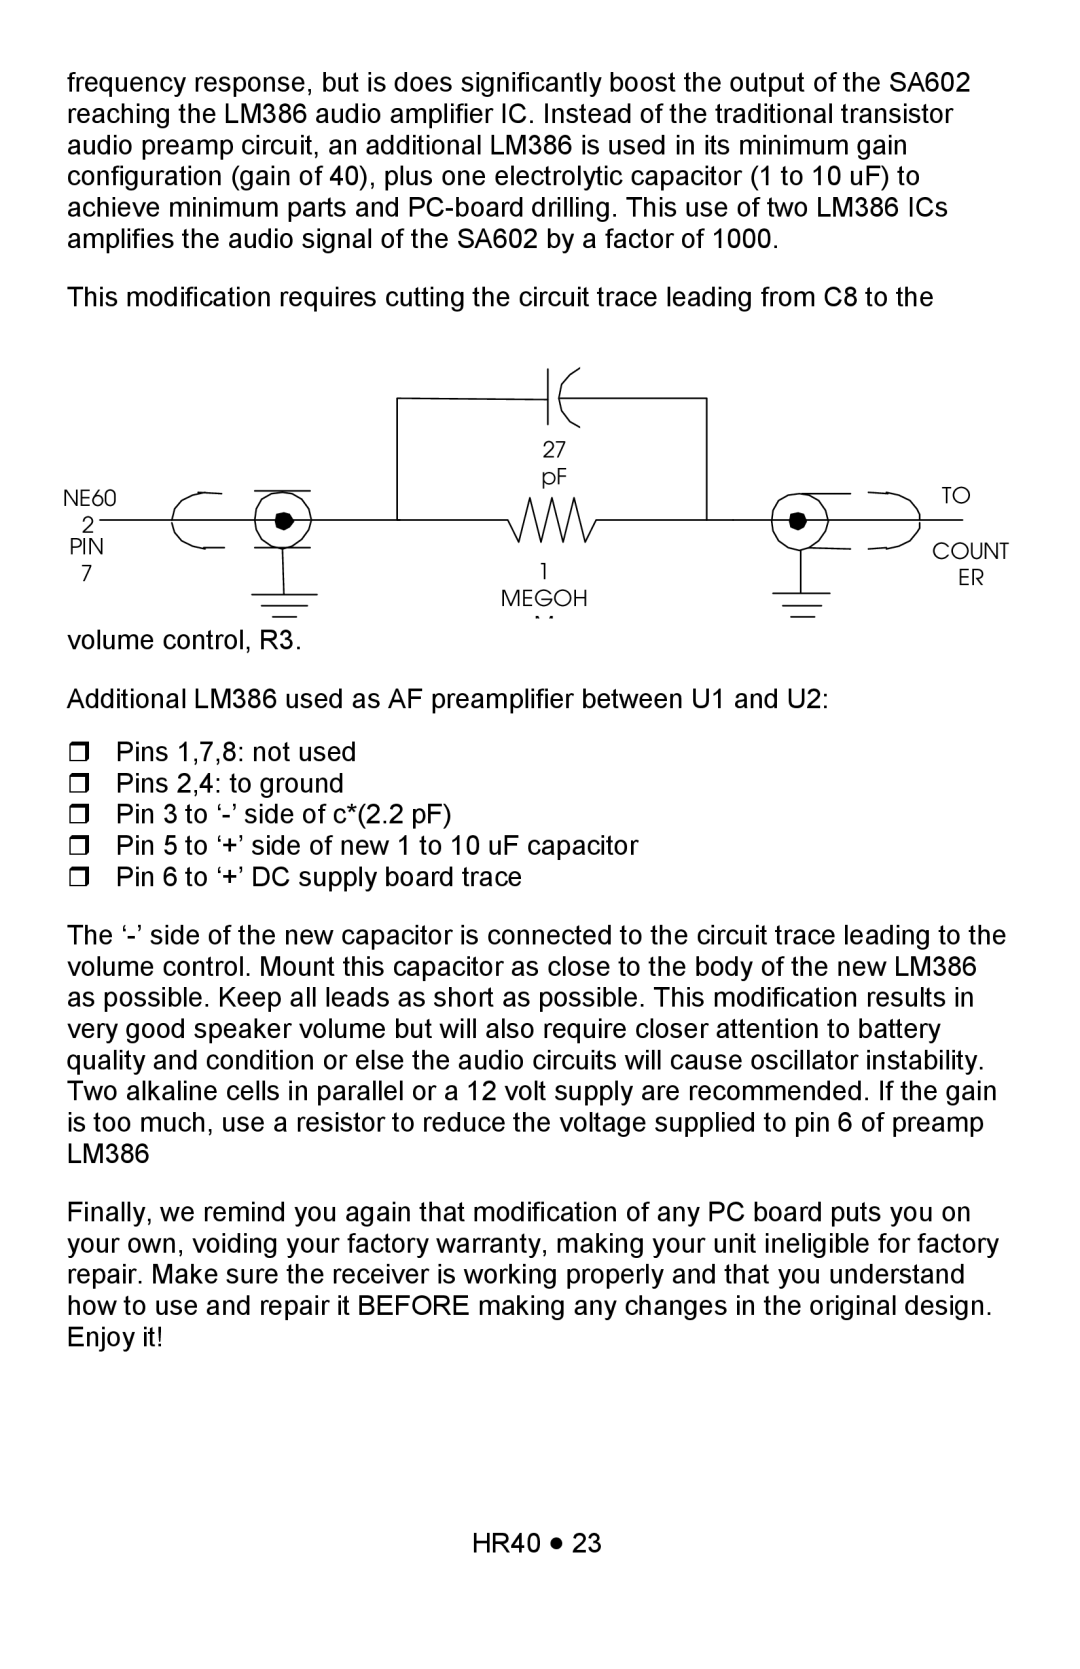 Ramsey Electronics HR40 manual volume control, R3 